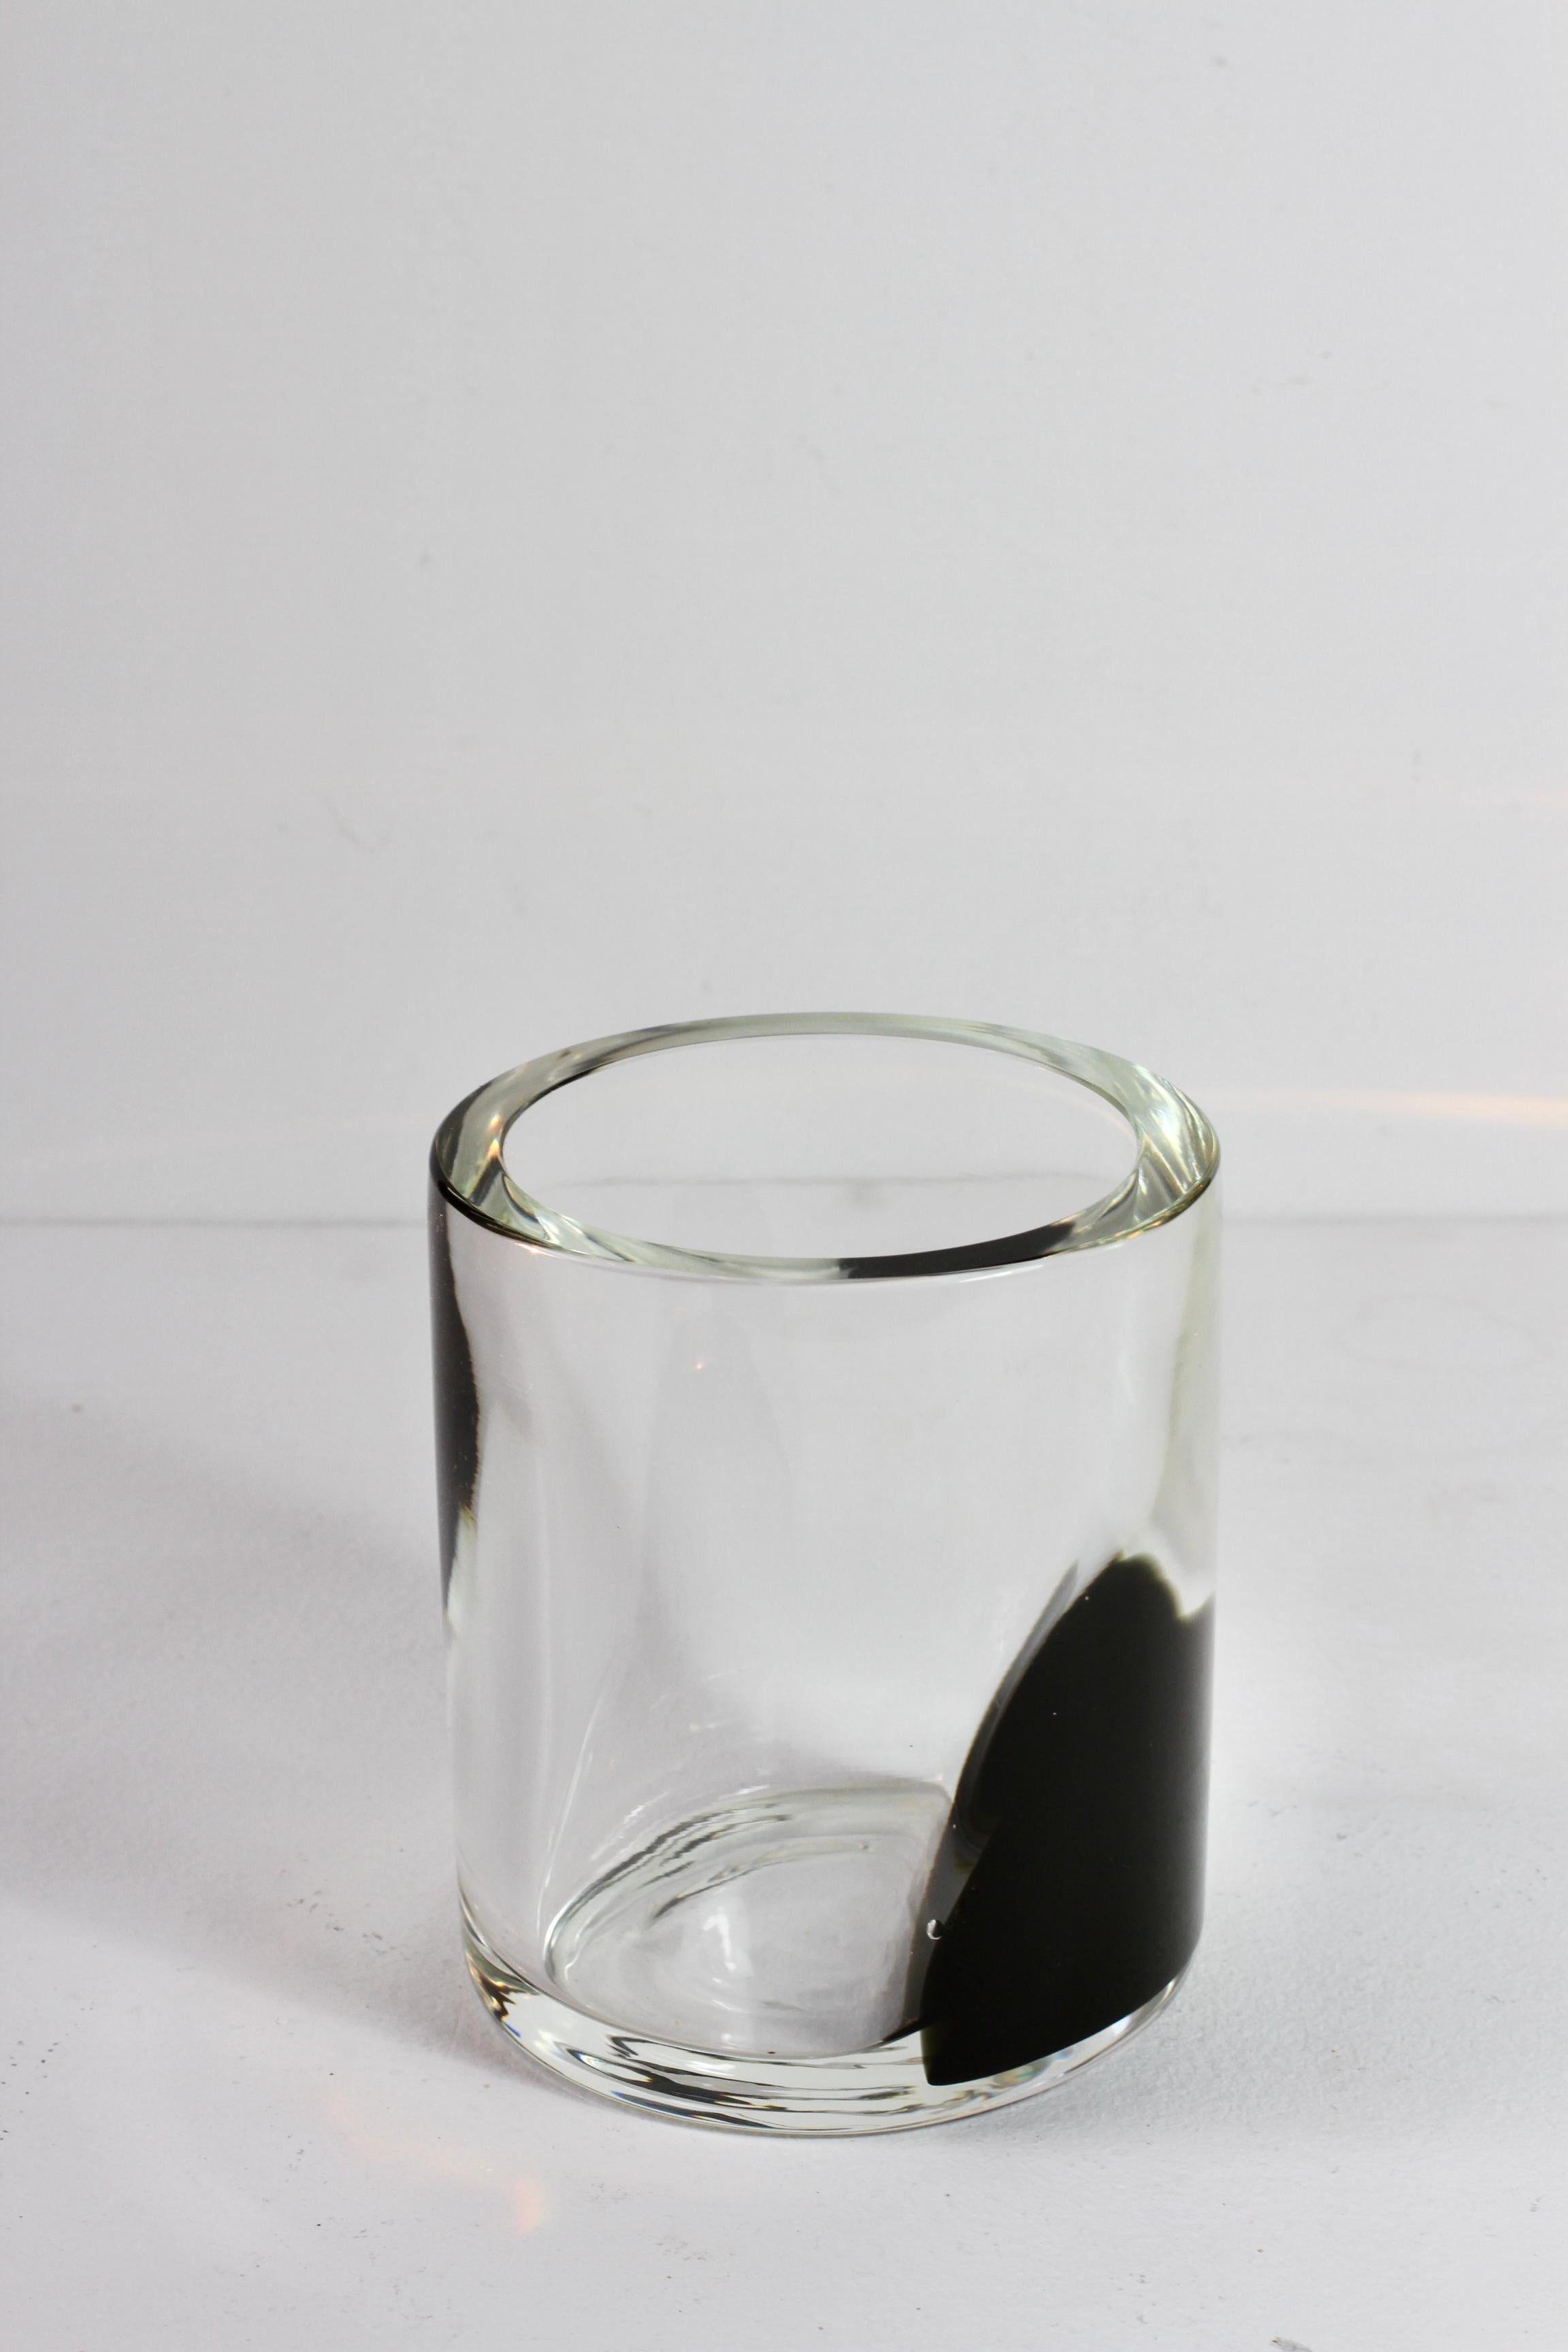 Antonio Da Ros for Cenedese 1970s Italian Round Black & Clear Murano Glass Vase For Sale 4